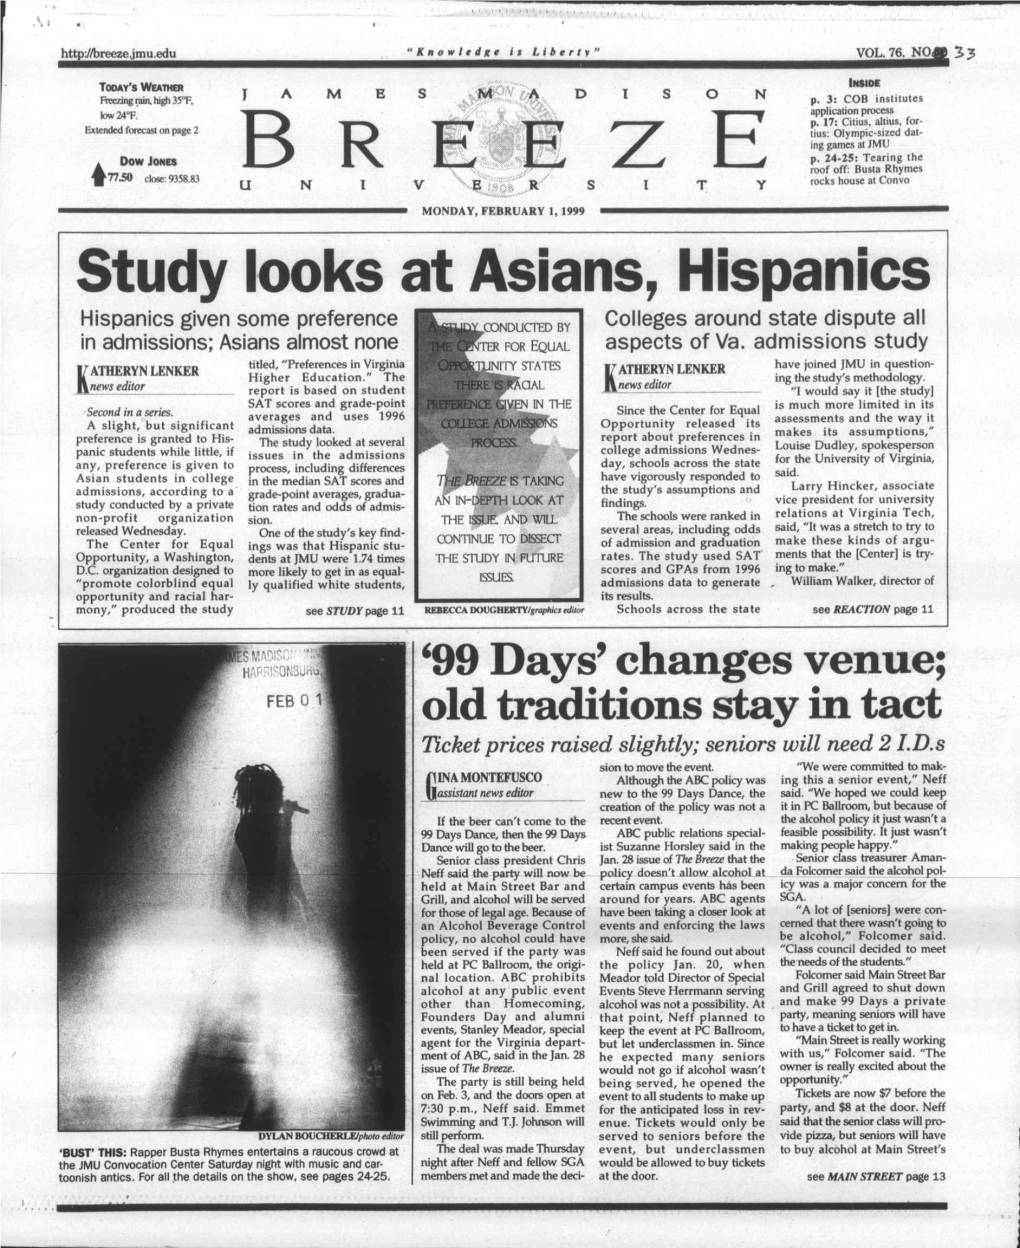 FEBRUARY 1, 1999 Study Looks at Asians, Hispanics